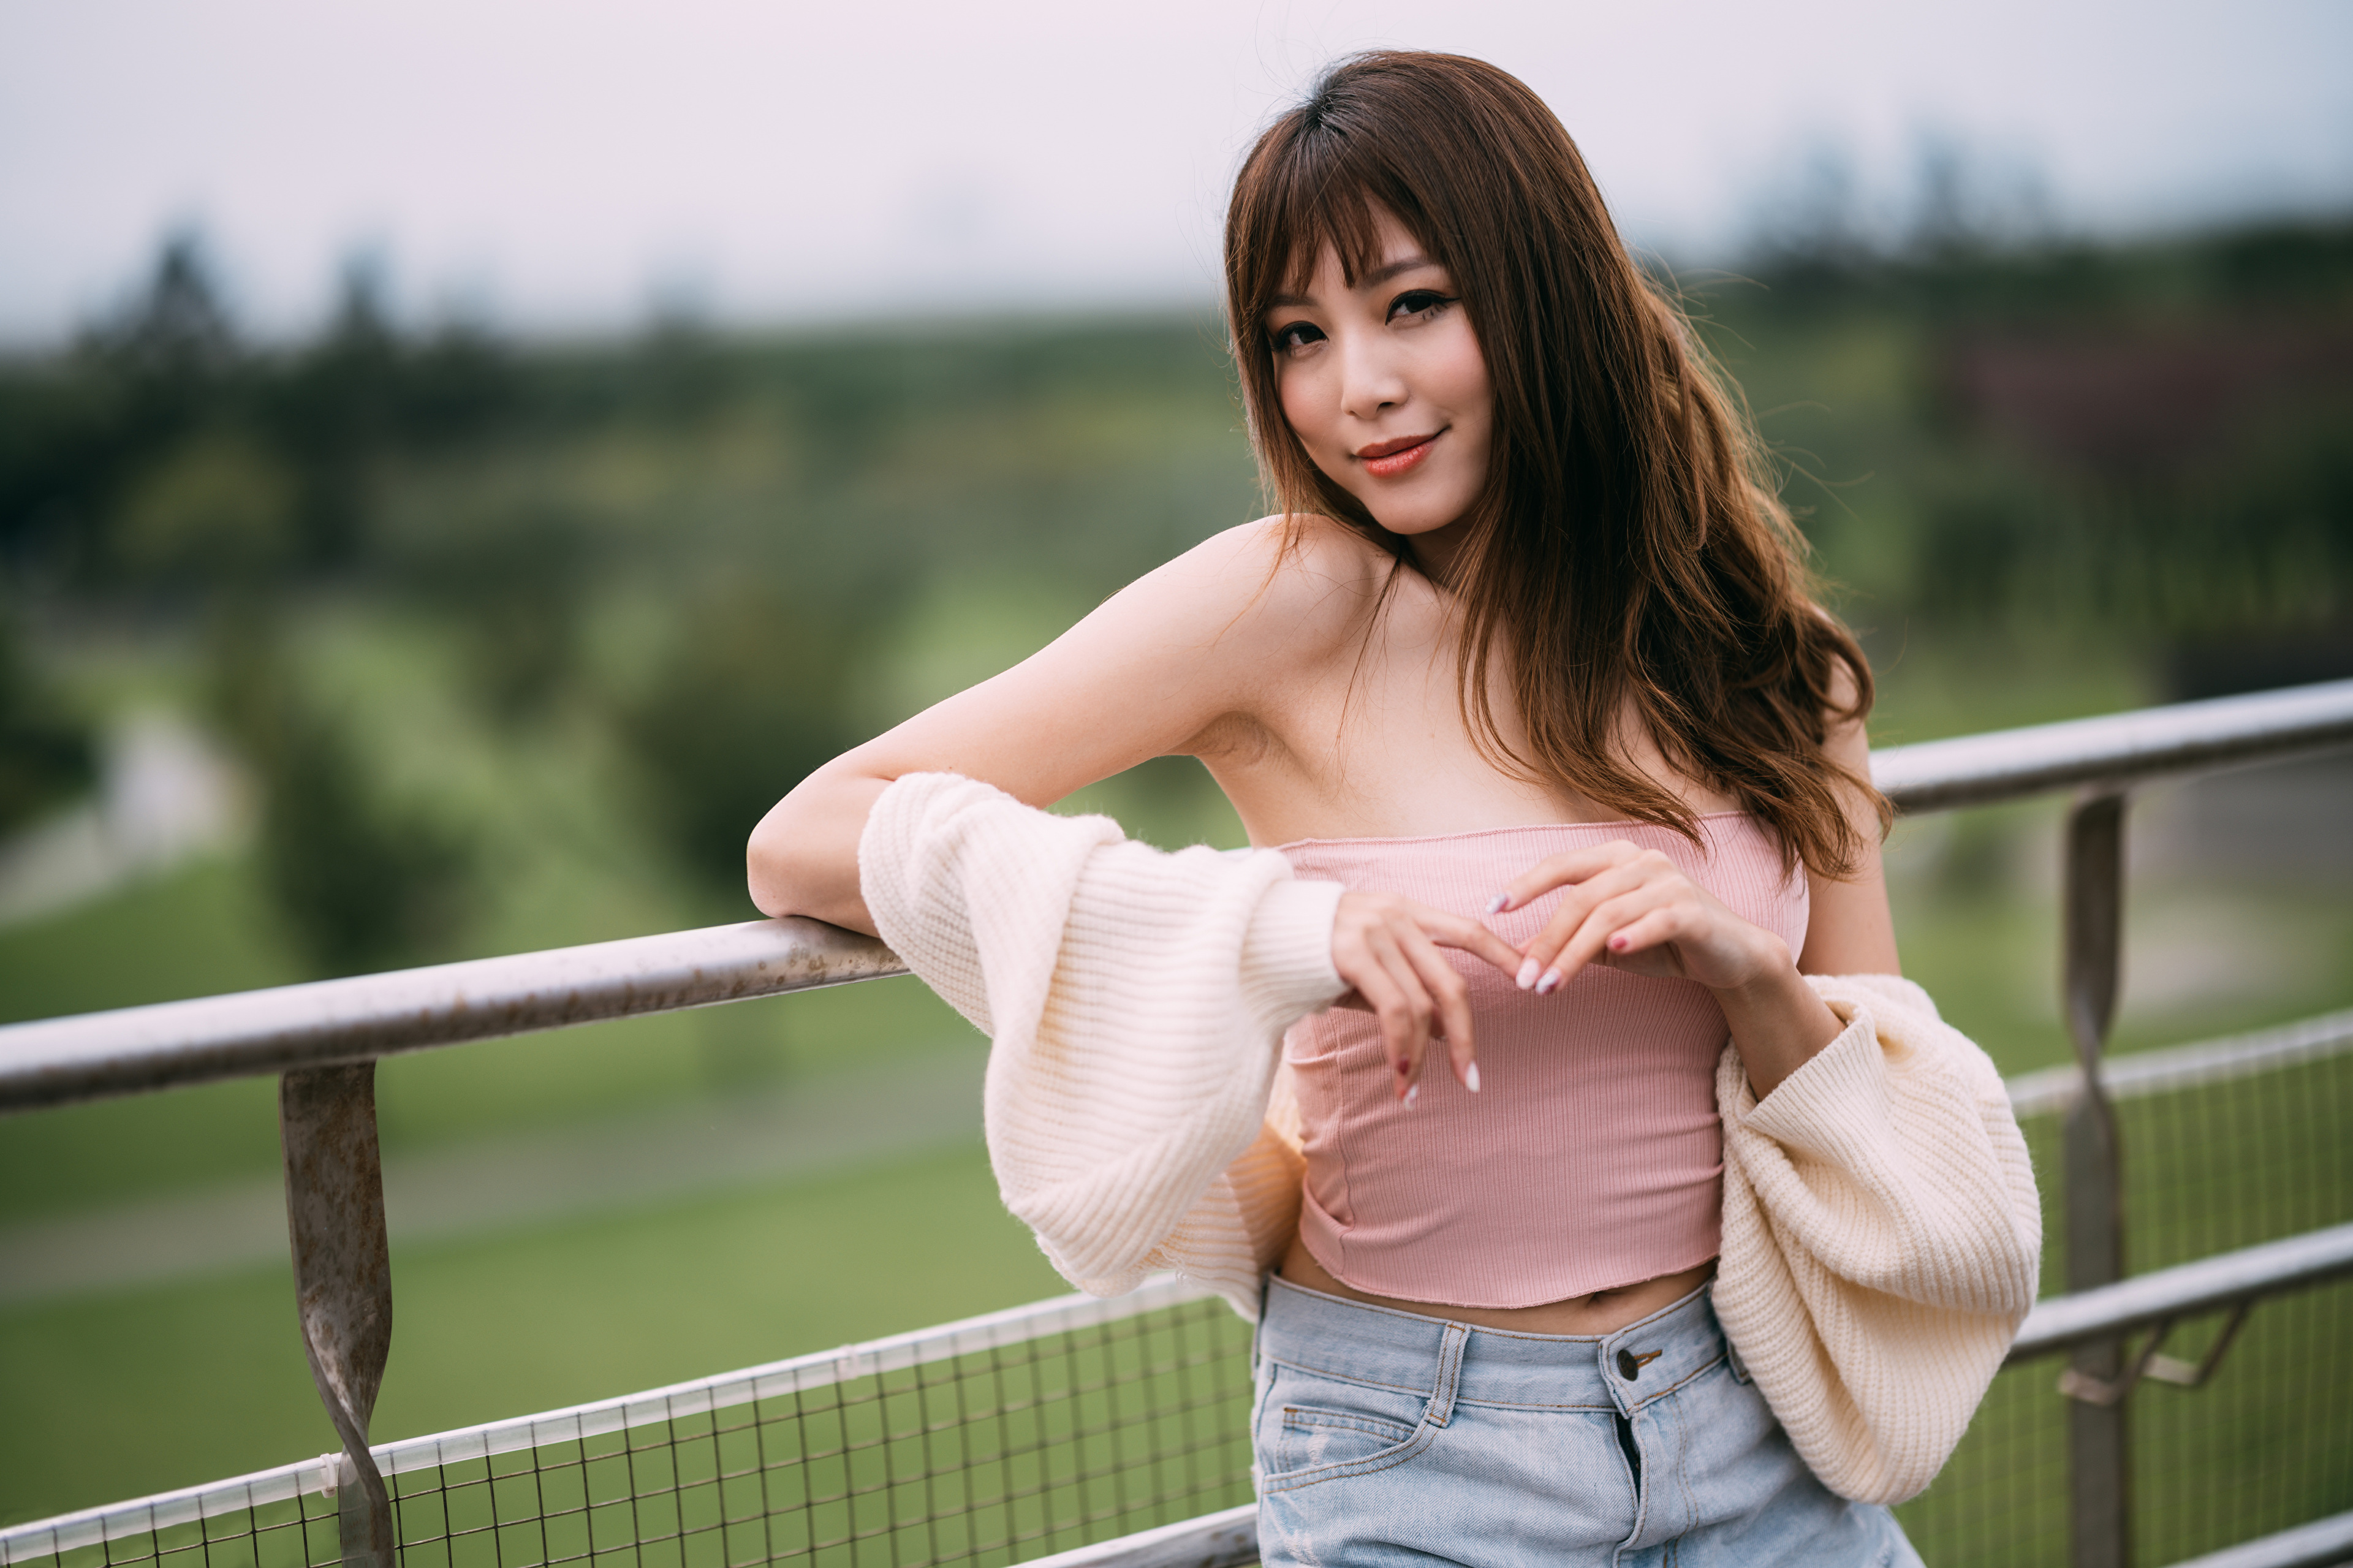 Asian Model Women Women Outdoors Dark Hair Long Hair Depth Of Field Railings Bare Shoulders Pink Top 3840x2559